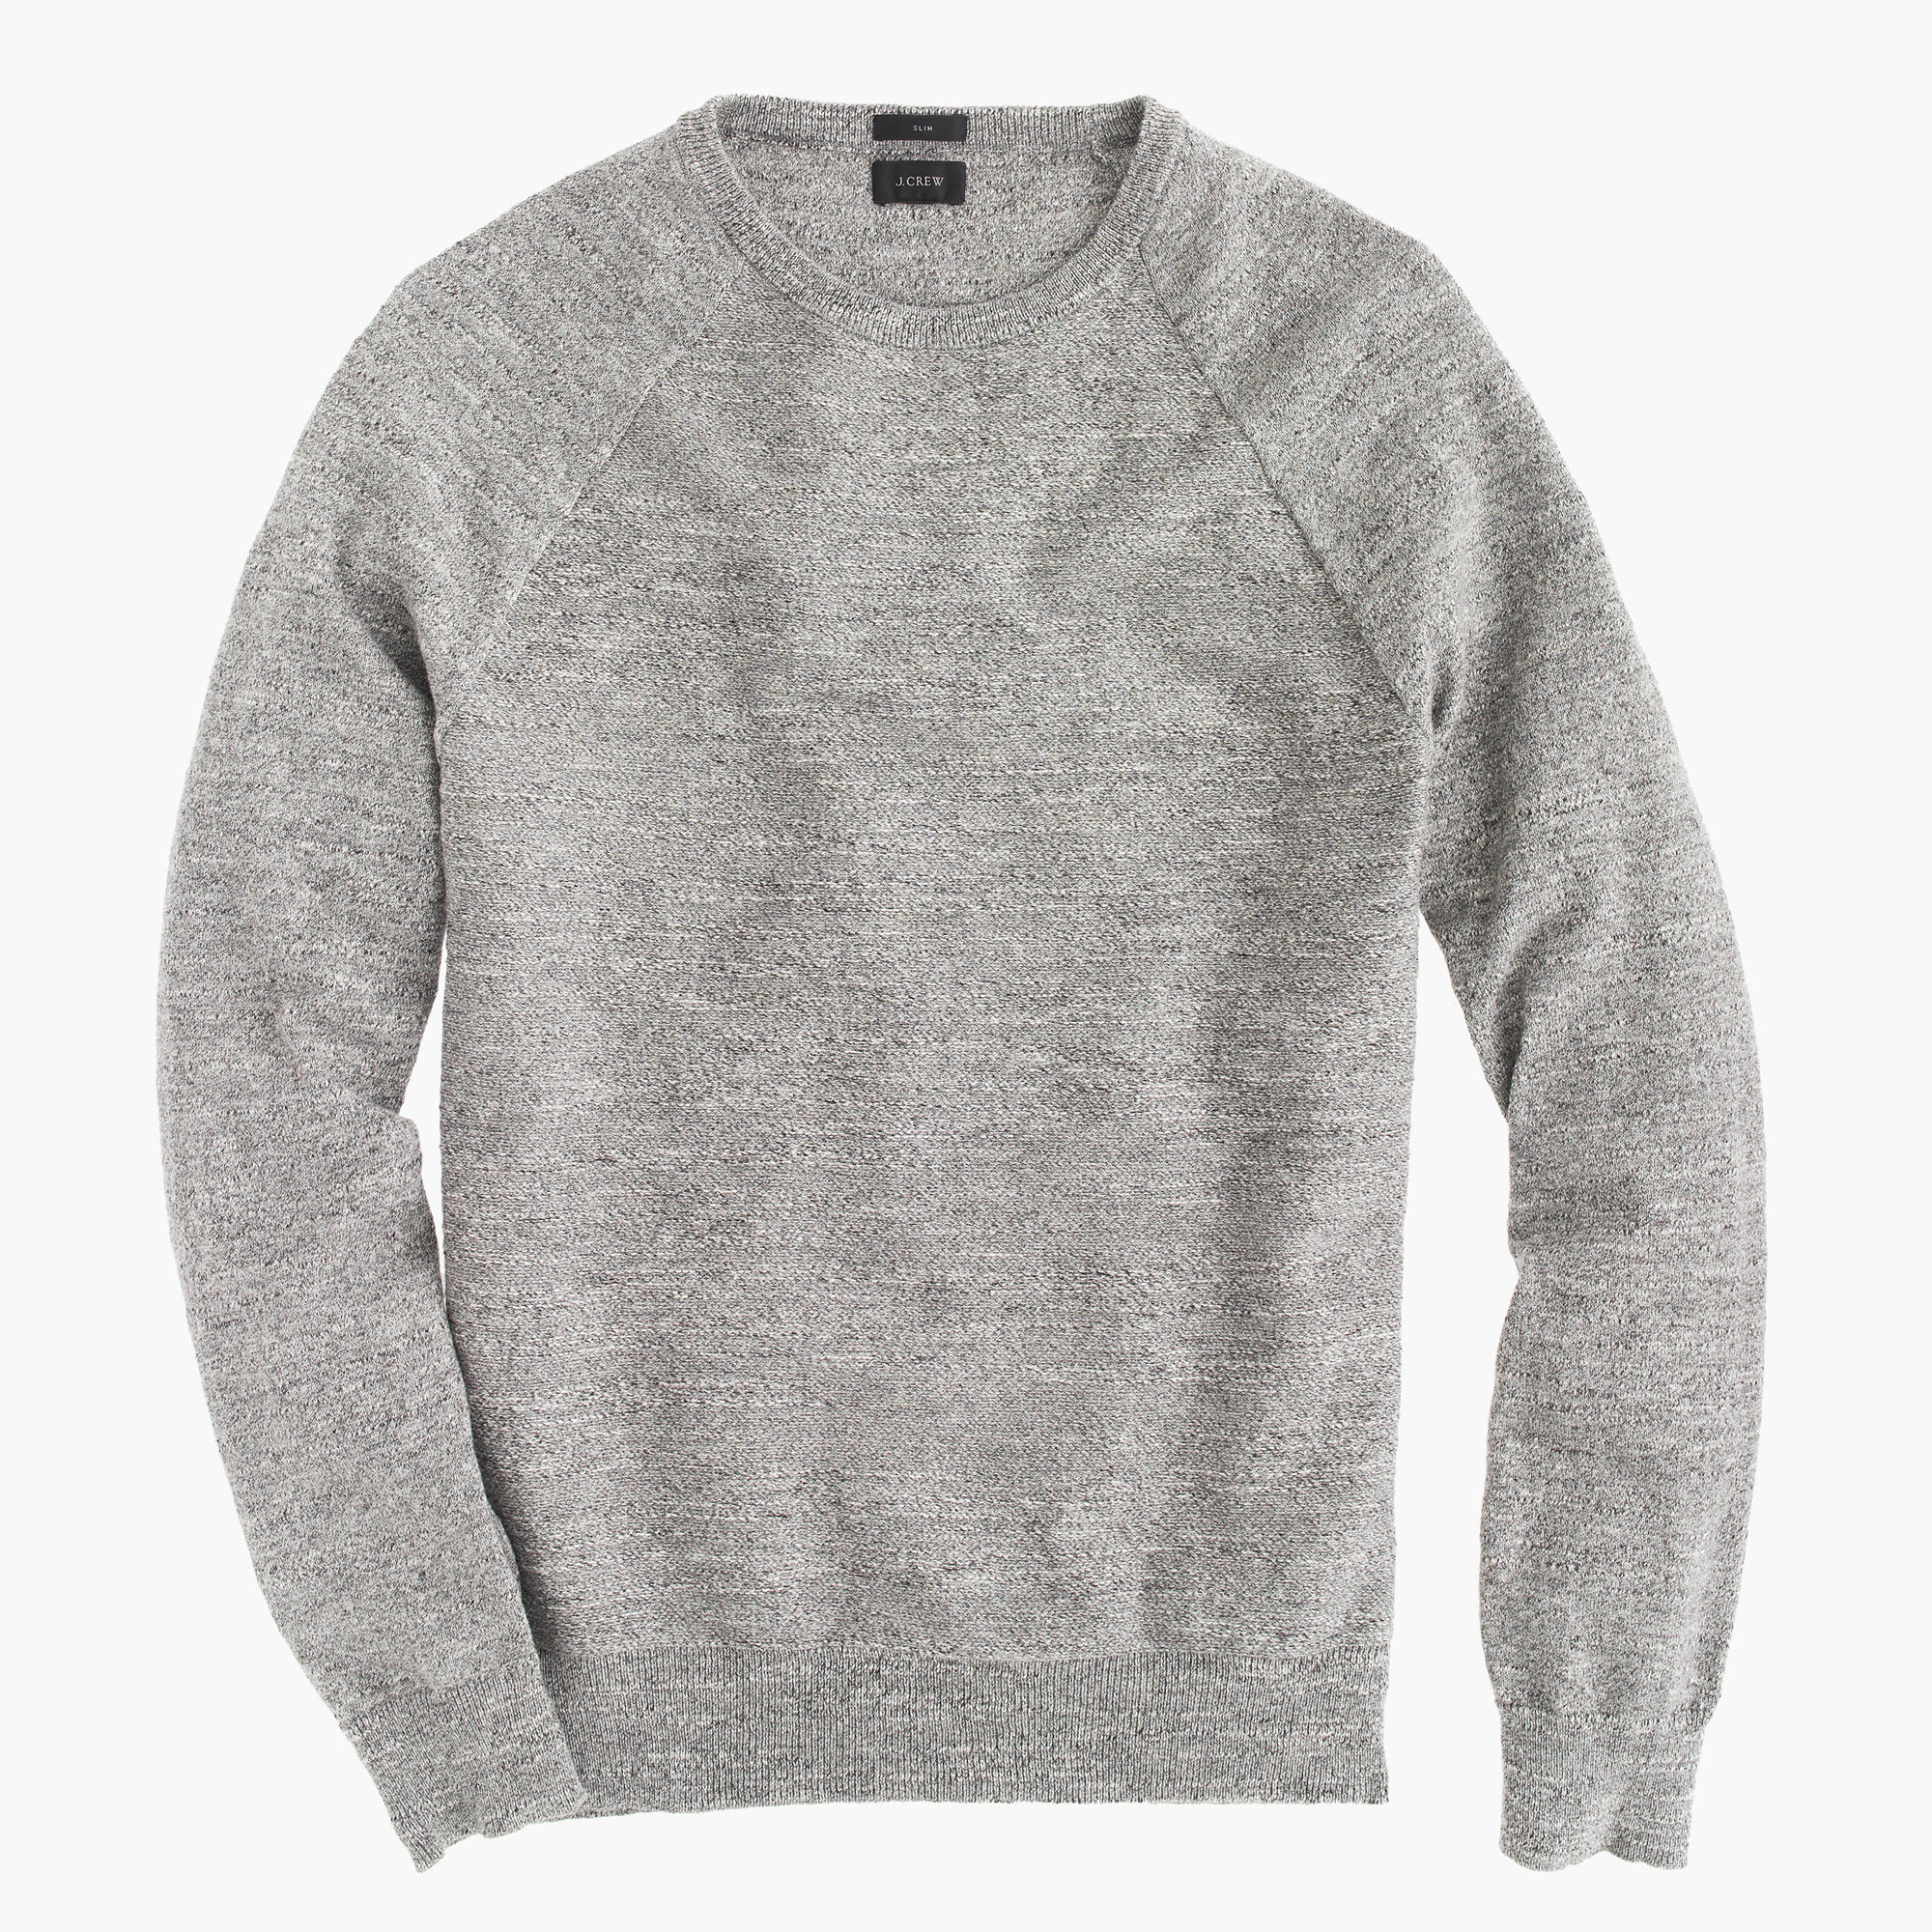 J.Crew Italian Cashmere V-neck Sweater in Gray for Men - Lyst